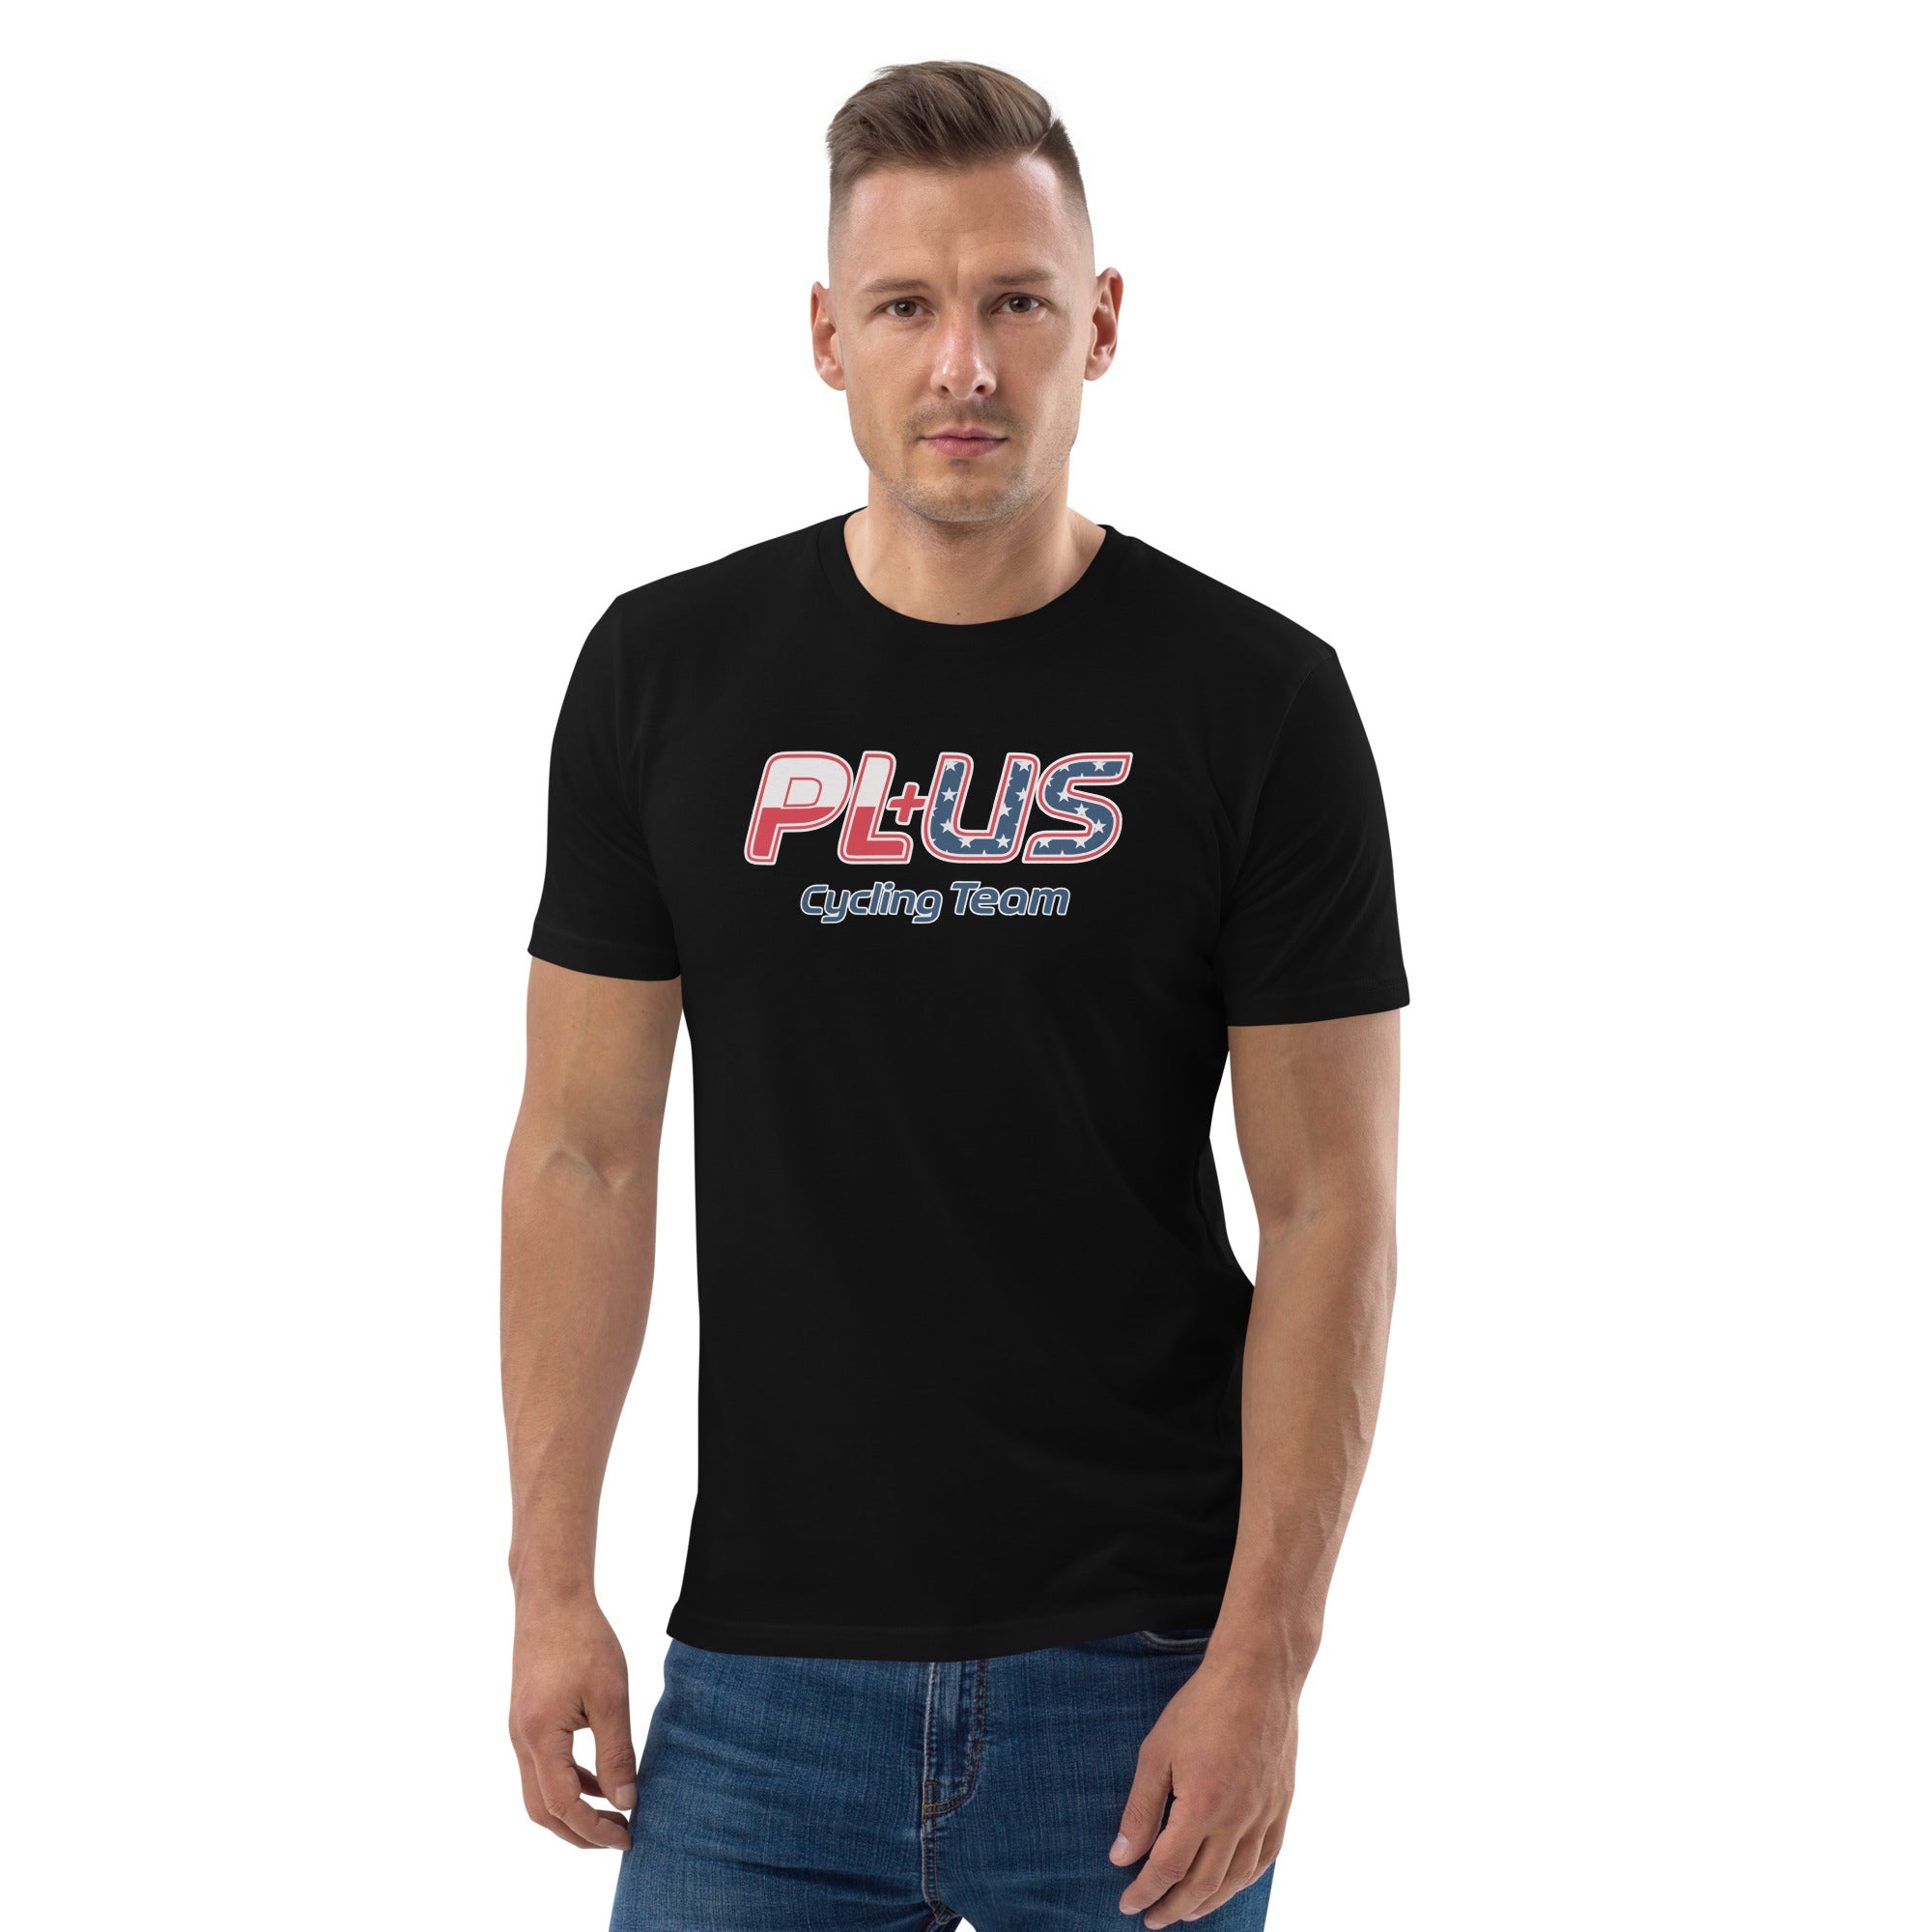 PLUS Cycling Team cotton t-shirt